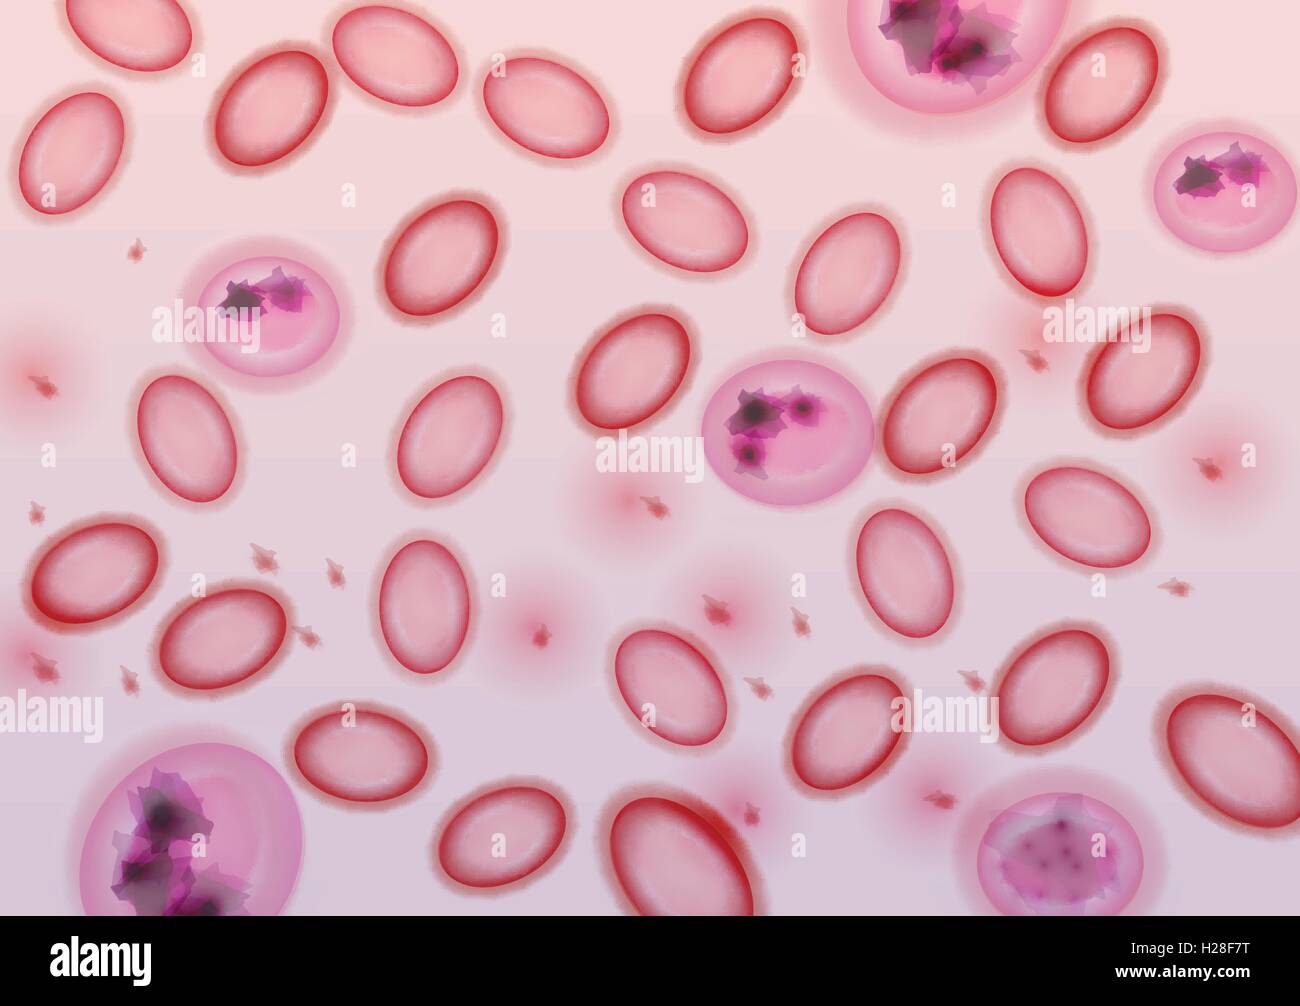 Blood Cells in Plasma - Vector Illustration Stock Vector